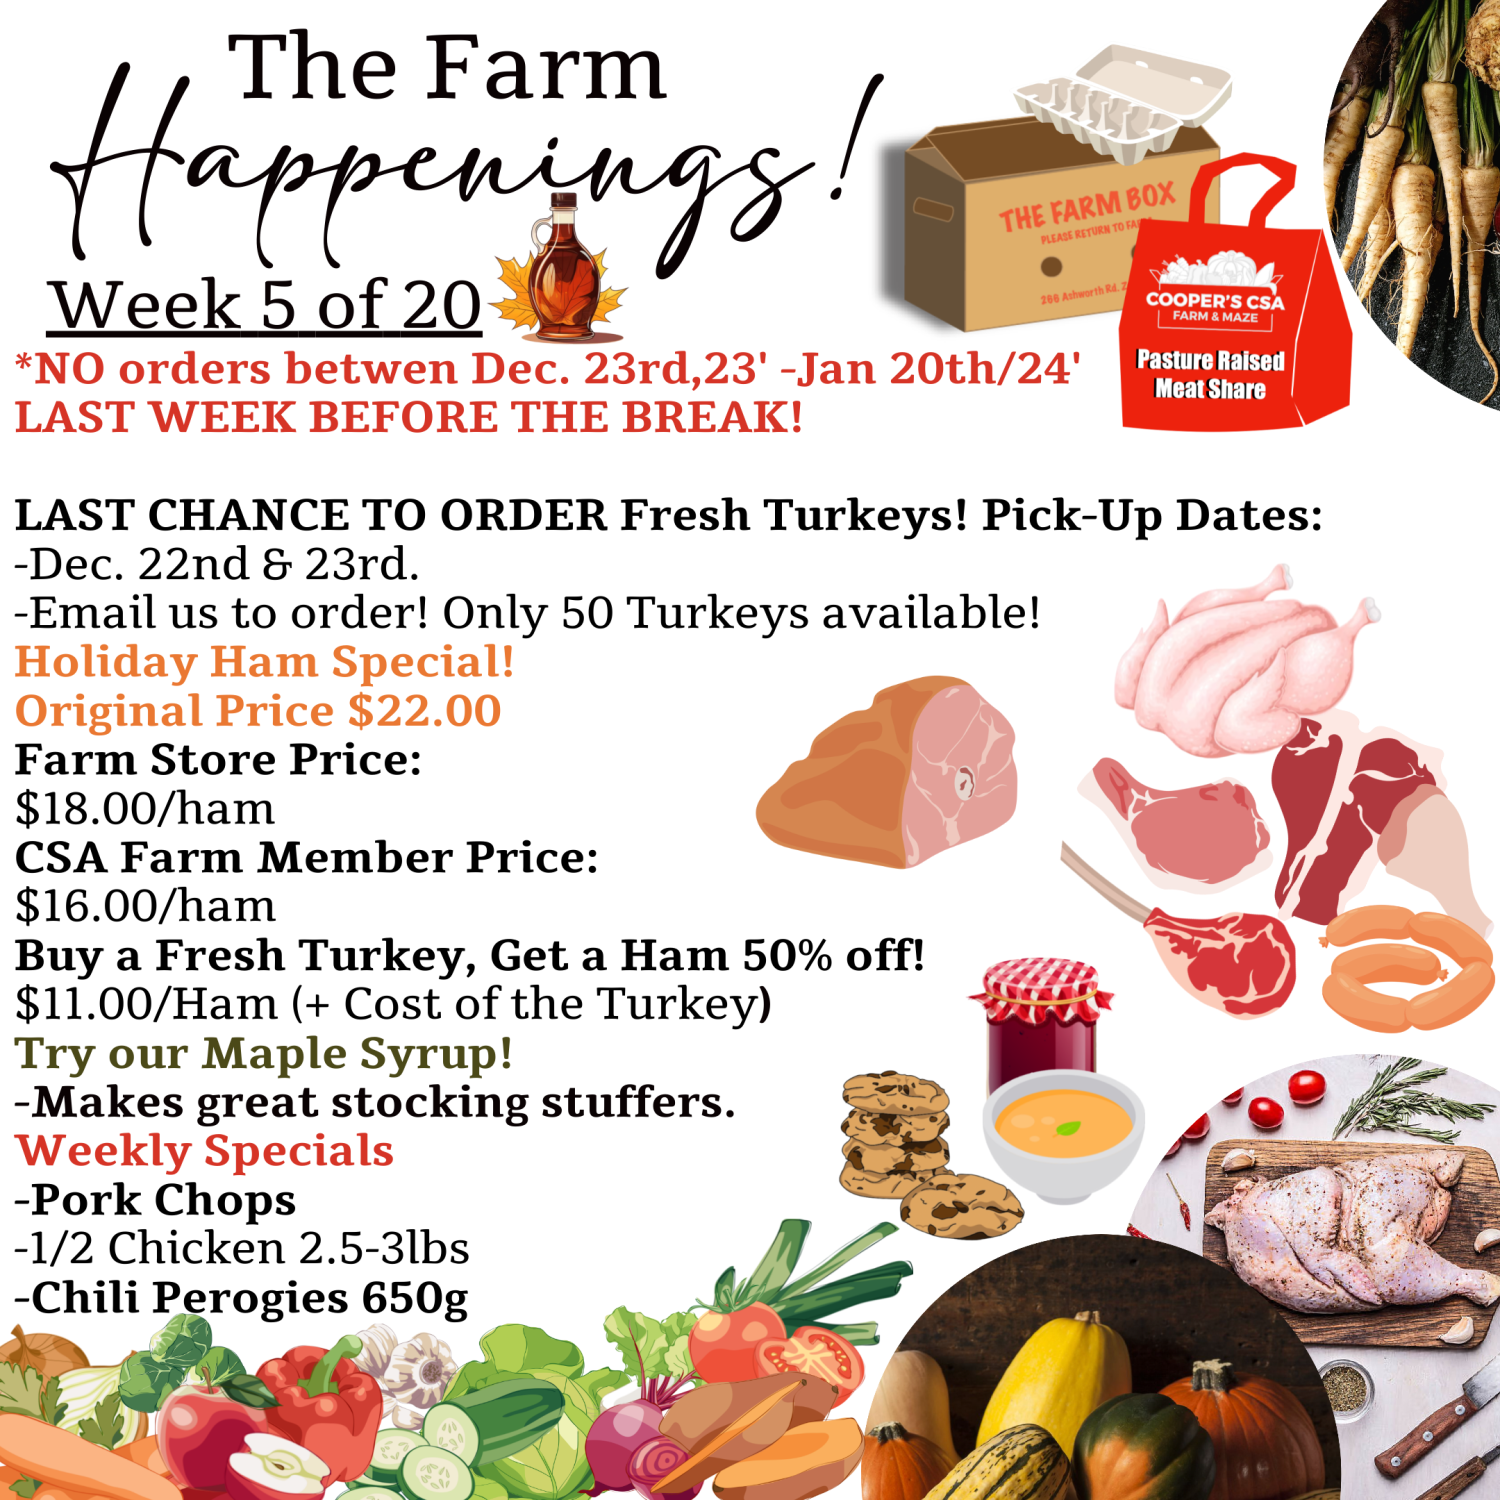 Next Happening: "The Farm Box"-Coopers CSA Farm Farm Happenings Dec. 19th-23rd